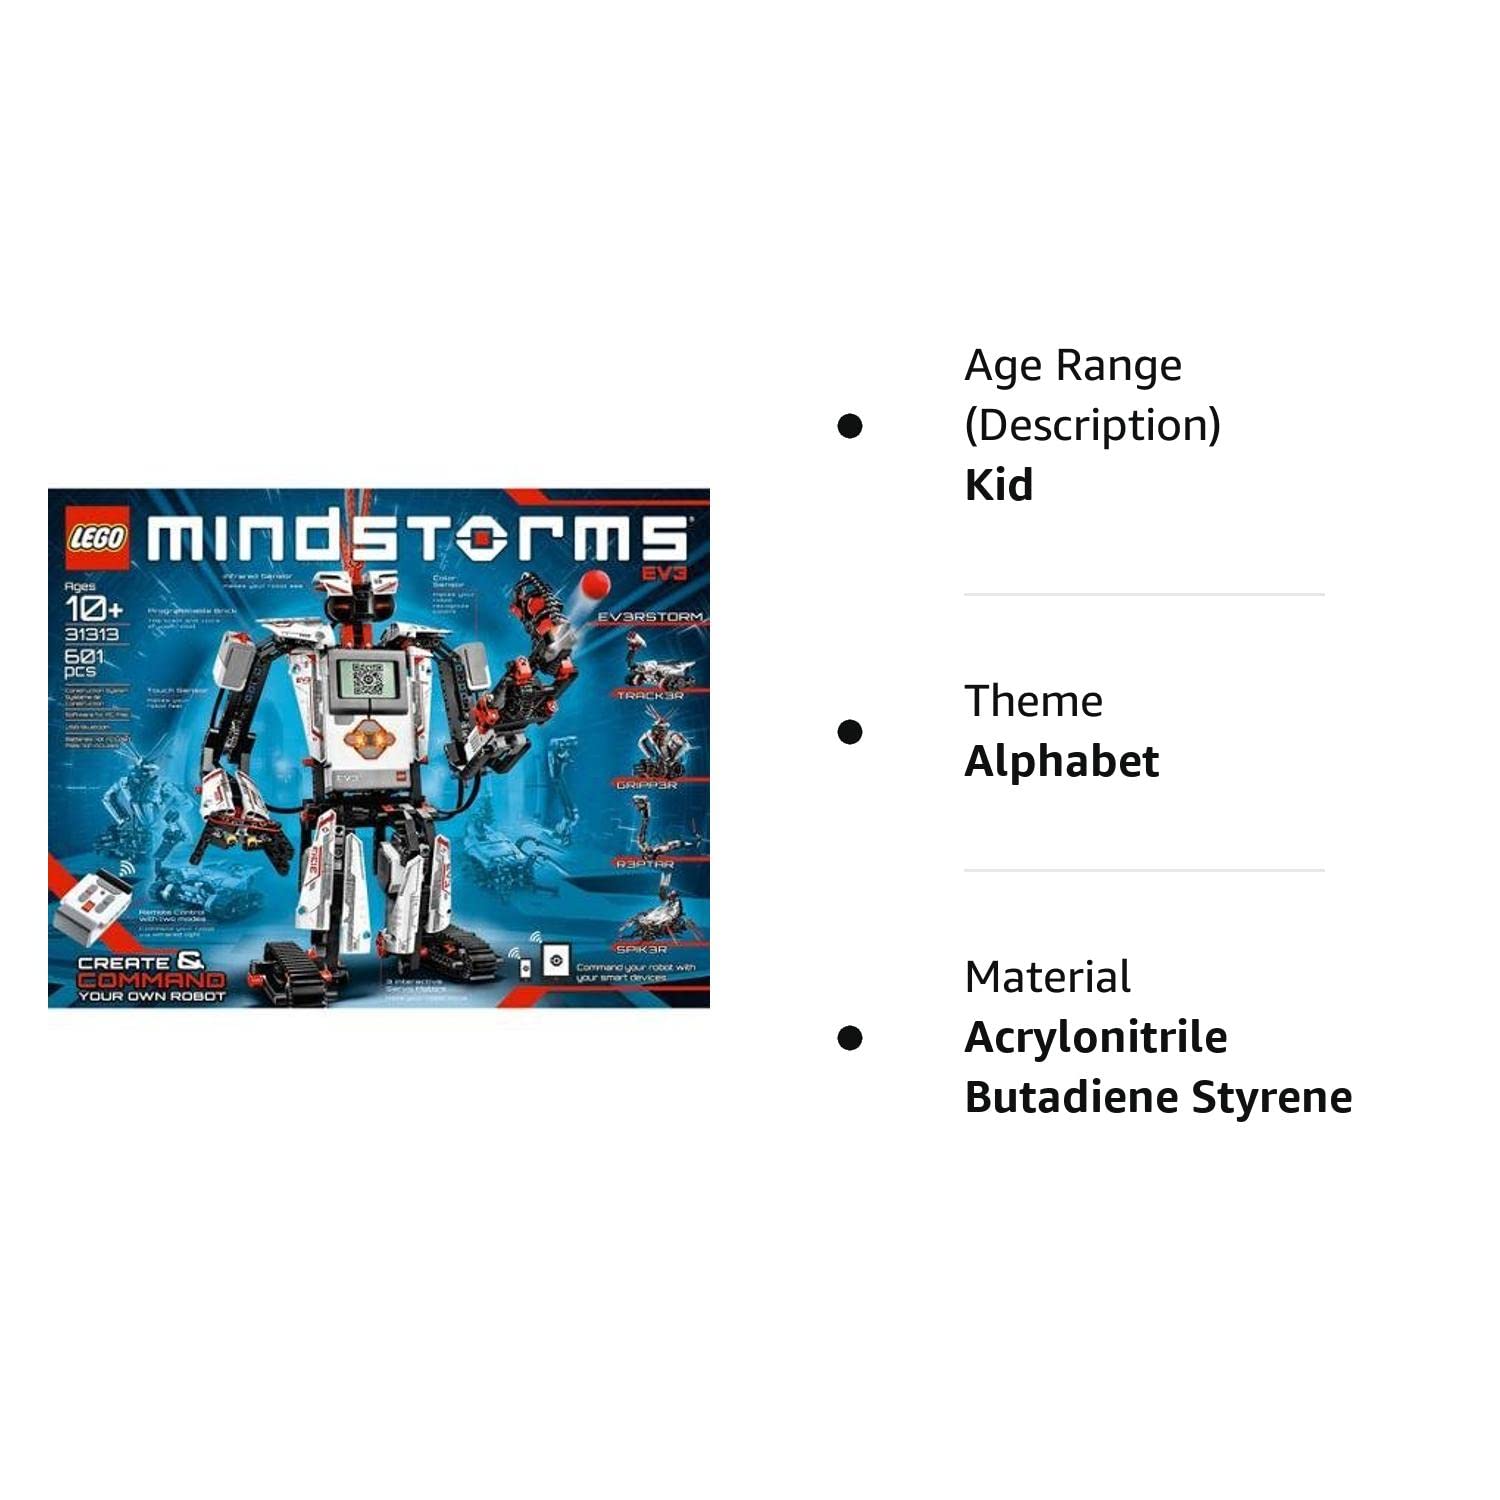 LEGO MINDSTORMS EV3 Building Set Includes 3 Interactive Servo Motors, Remote Control, Improved And Redesigned Color Sensor, Redesigned Touch Sensor, Infrared Sensor And 550+ LEGO Technic Elements